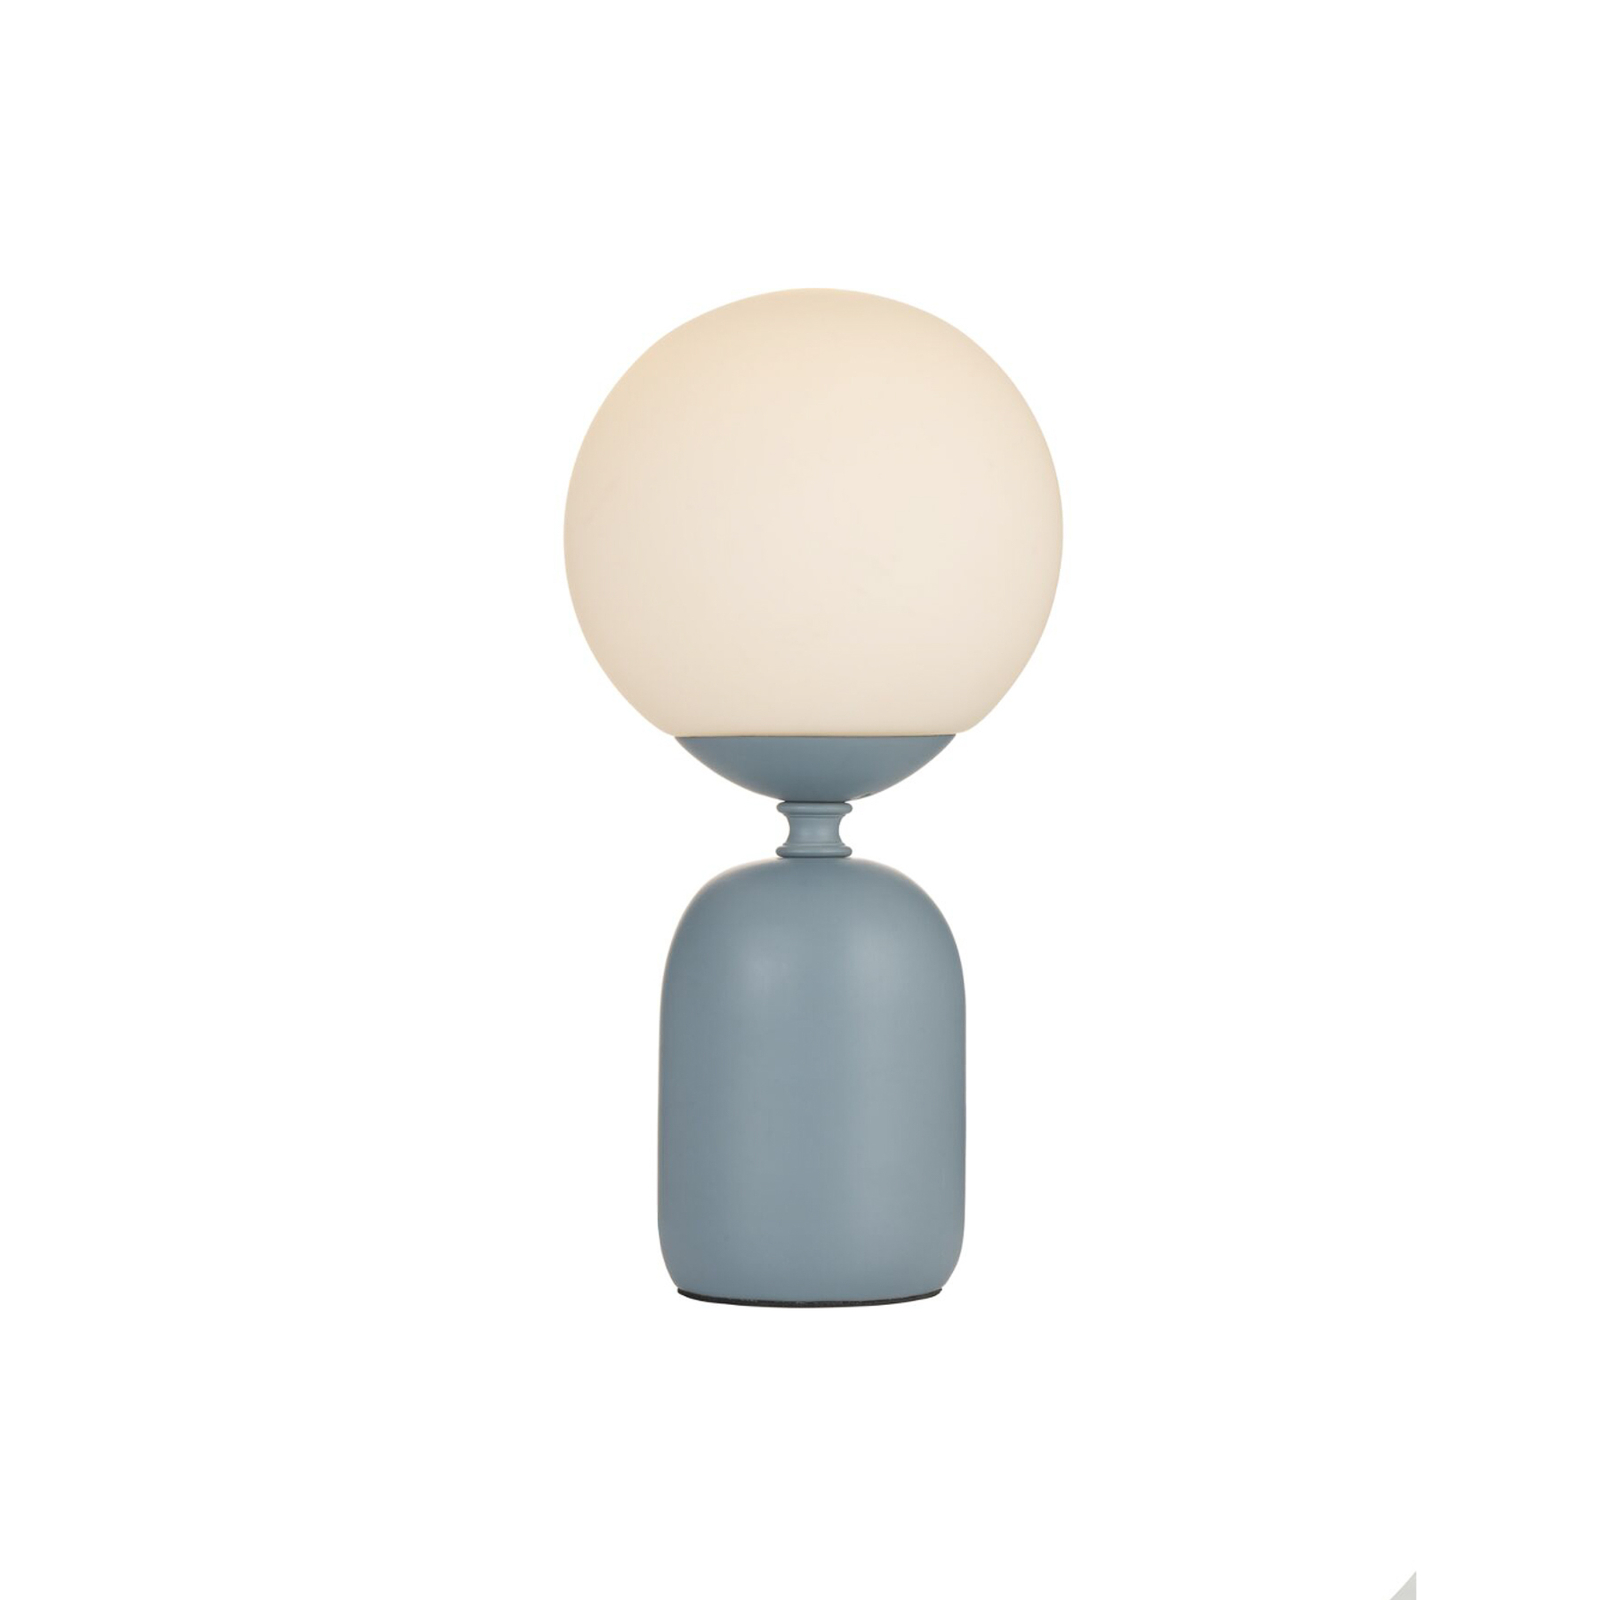 Pauleen Glowing Charm stolní lampa, keramika modrá